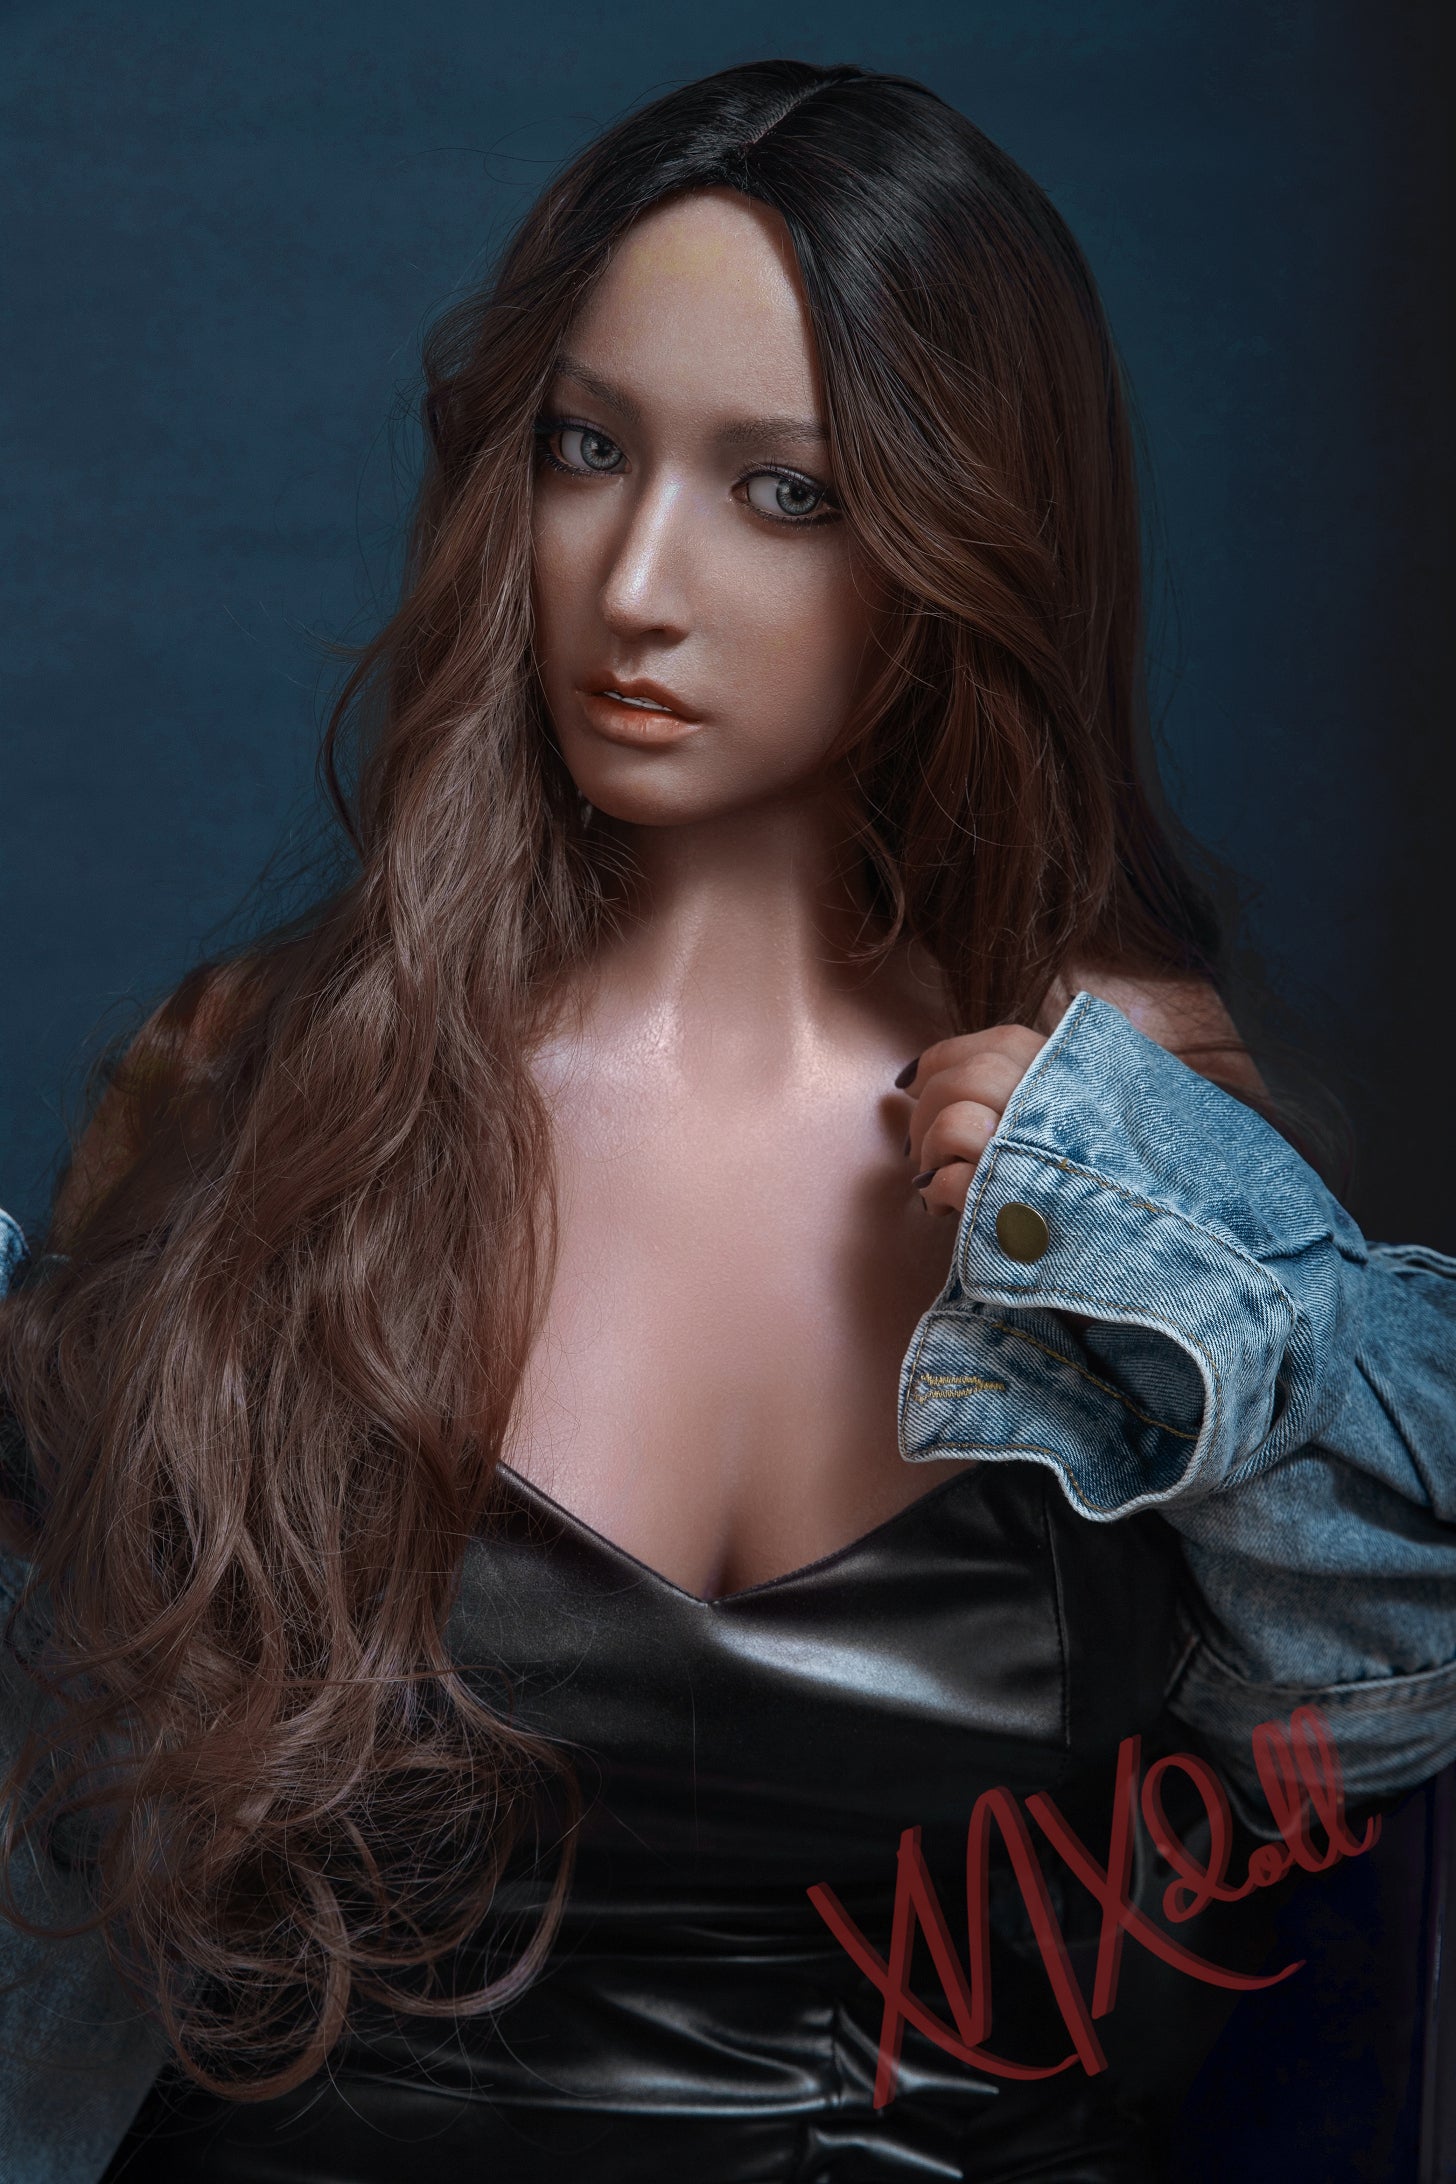 XNX Doll 164 cm X12 Silicone - Taylor | Buy Sex Dolls at DOLLS ACTUALLY